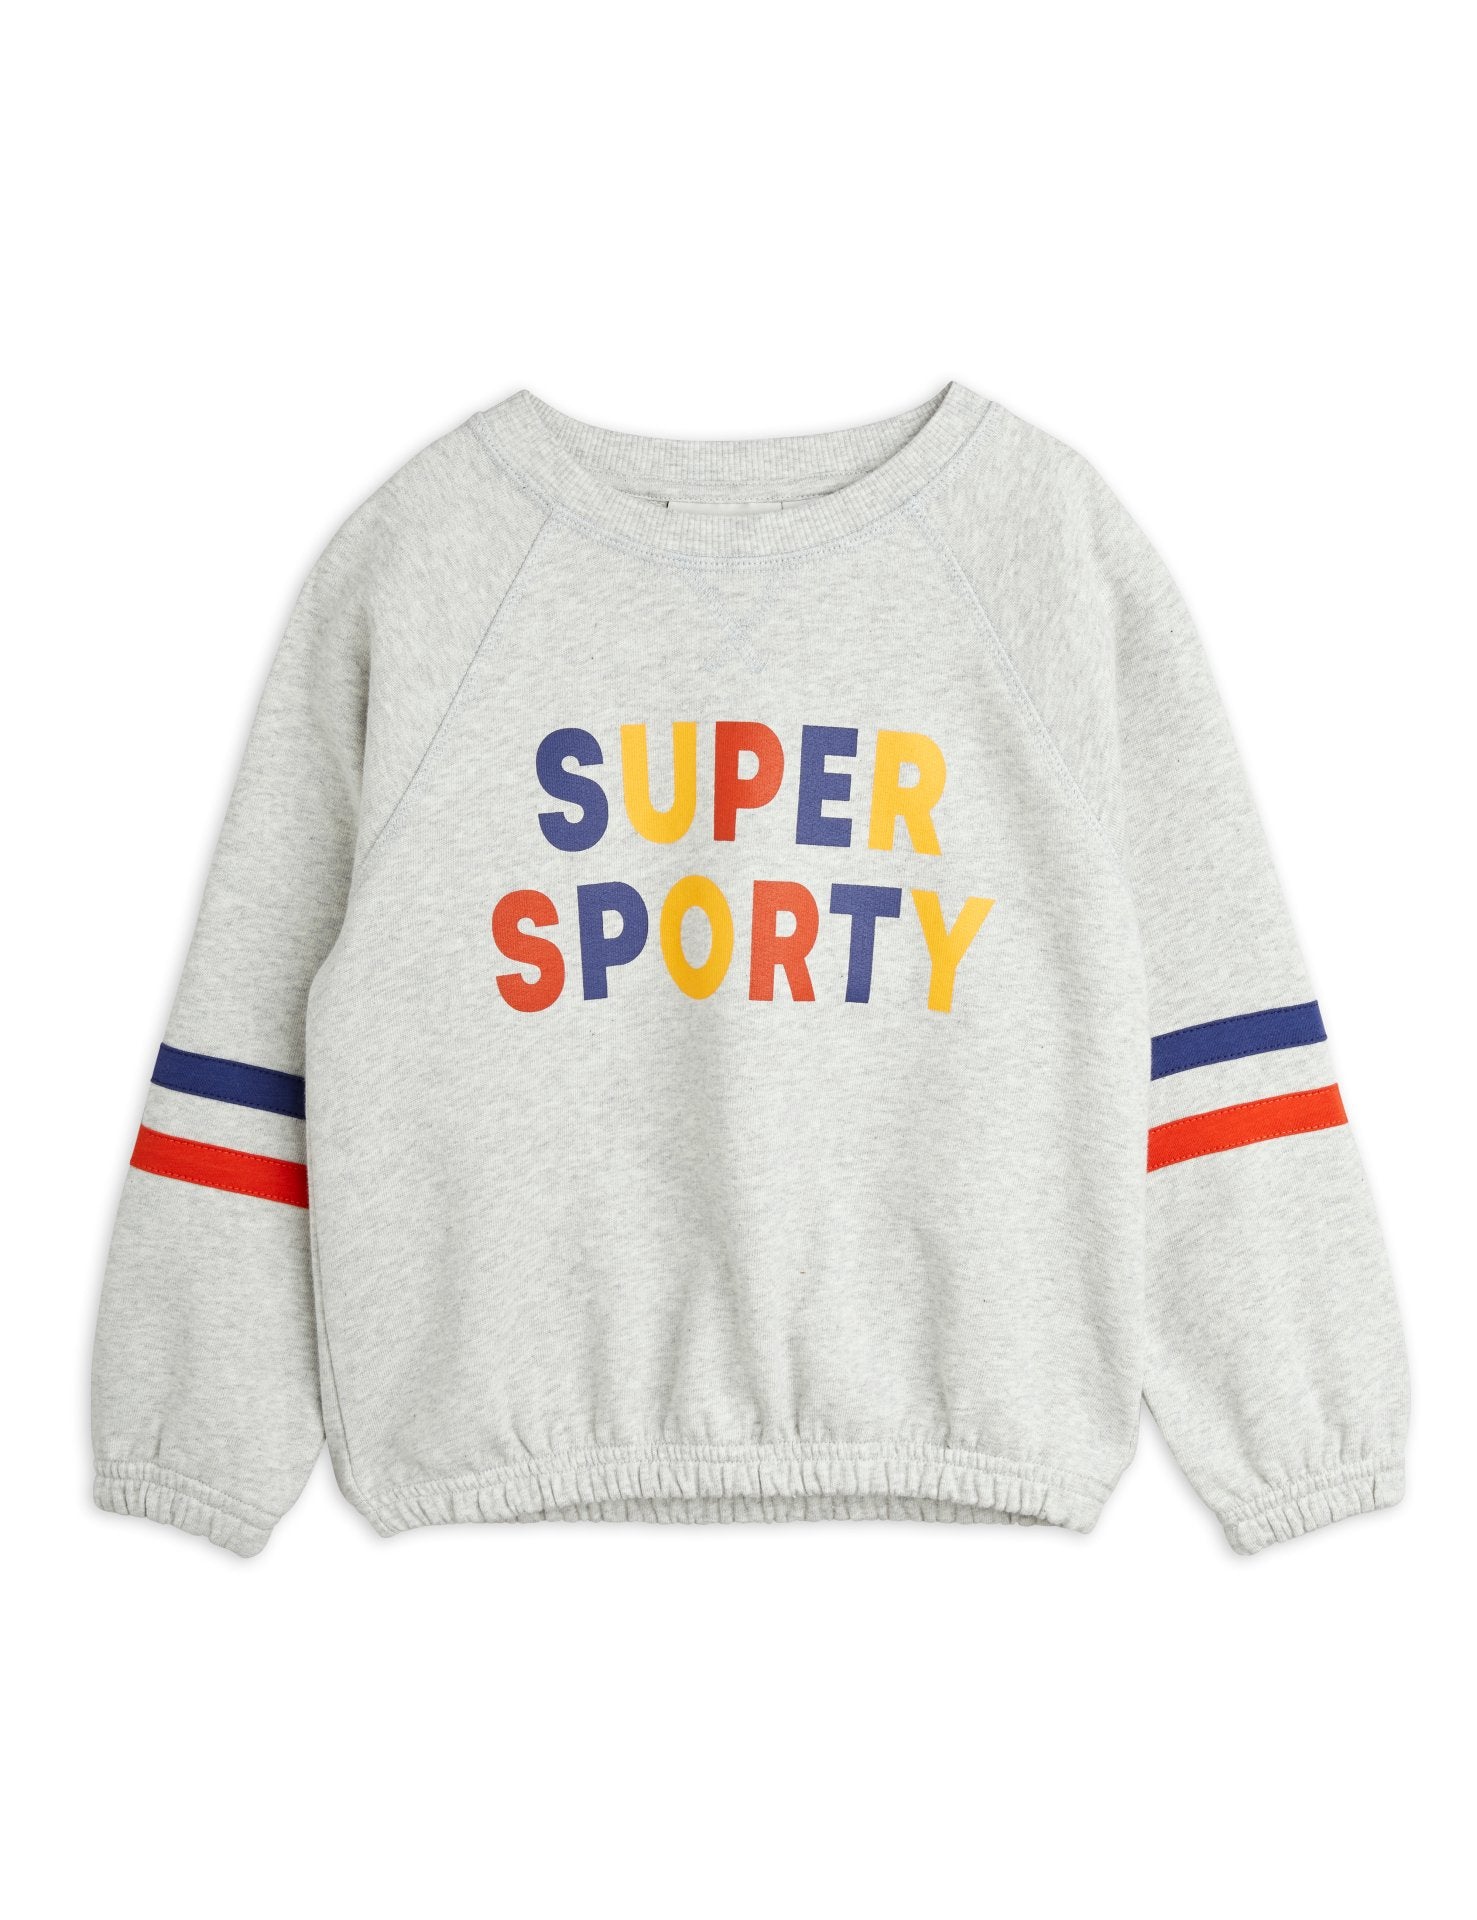 Super sporty sp sweatshirt